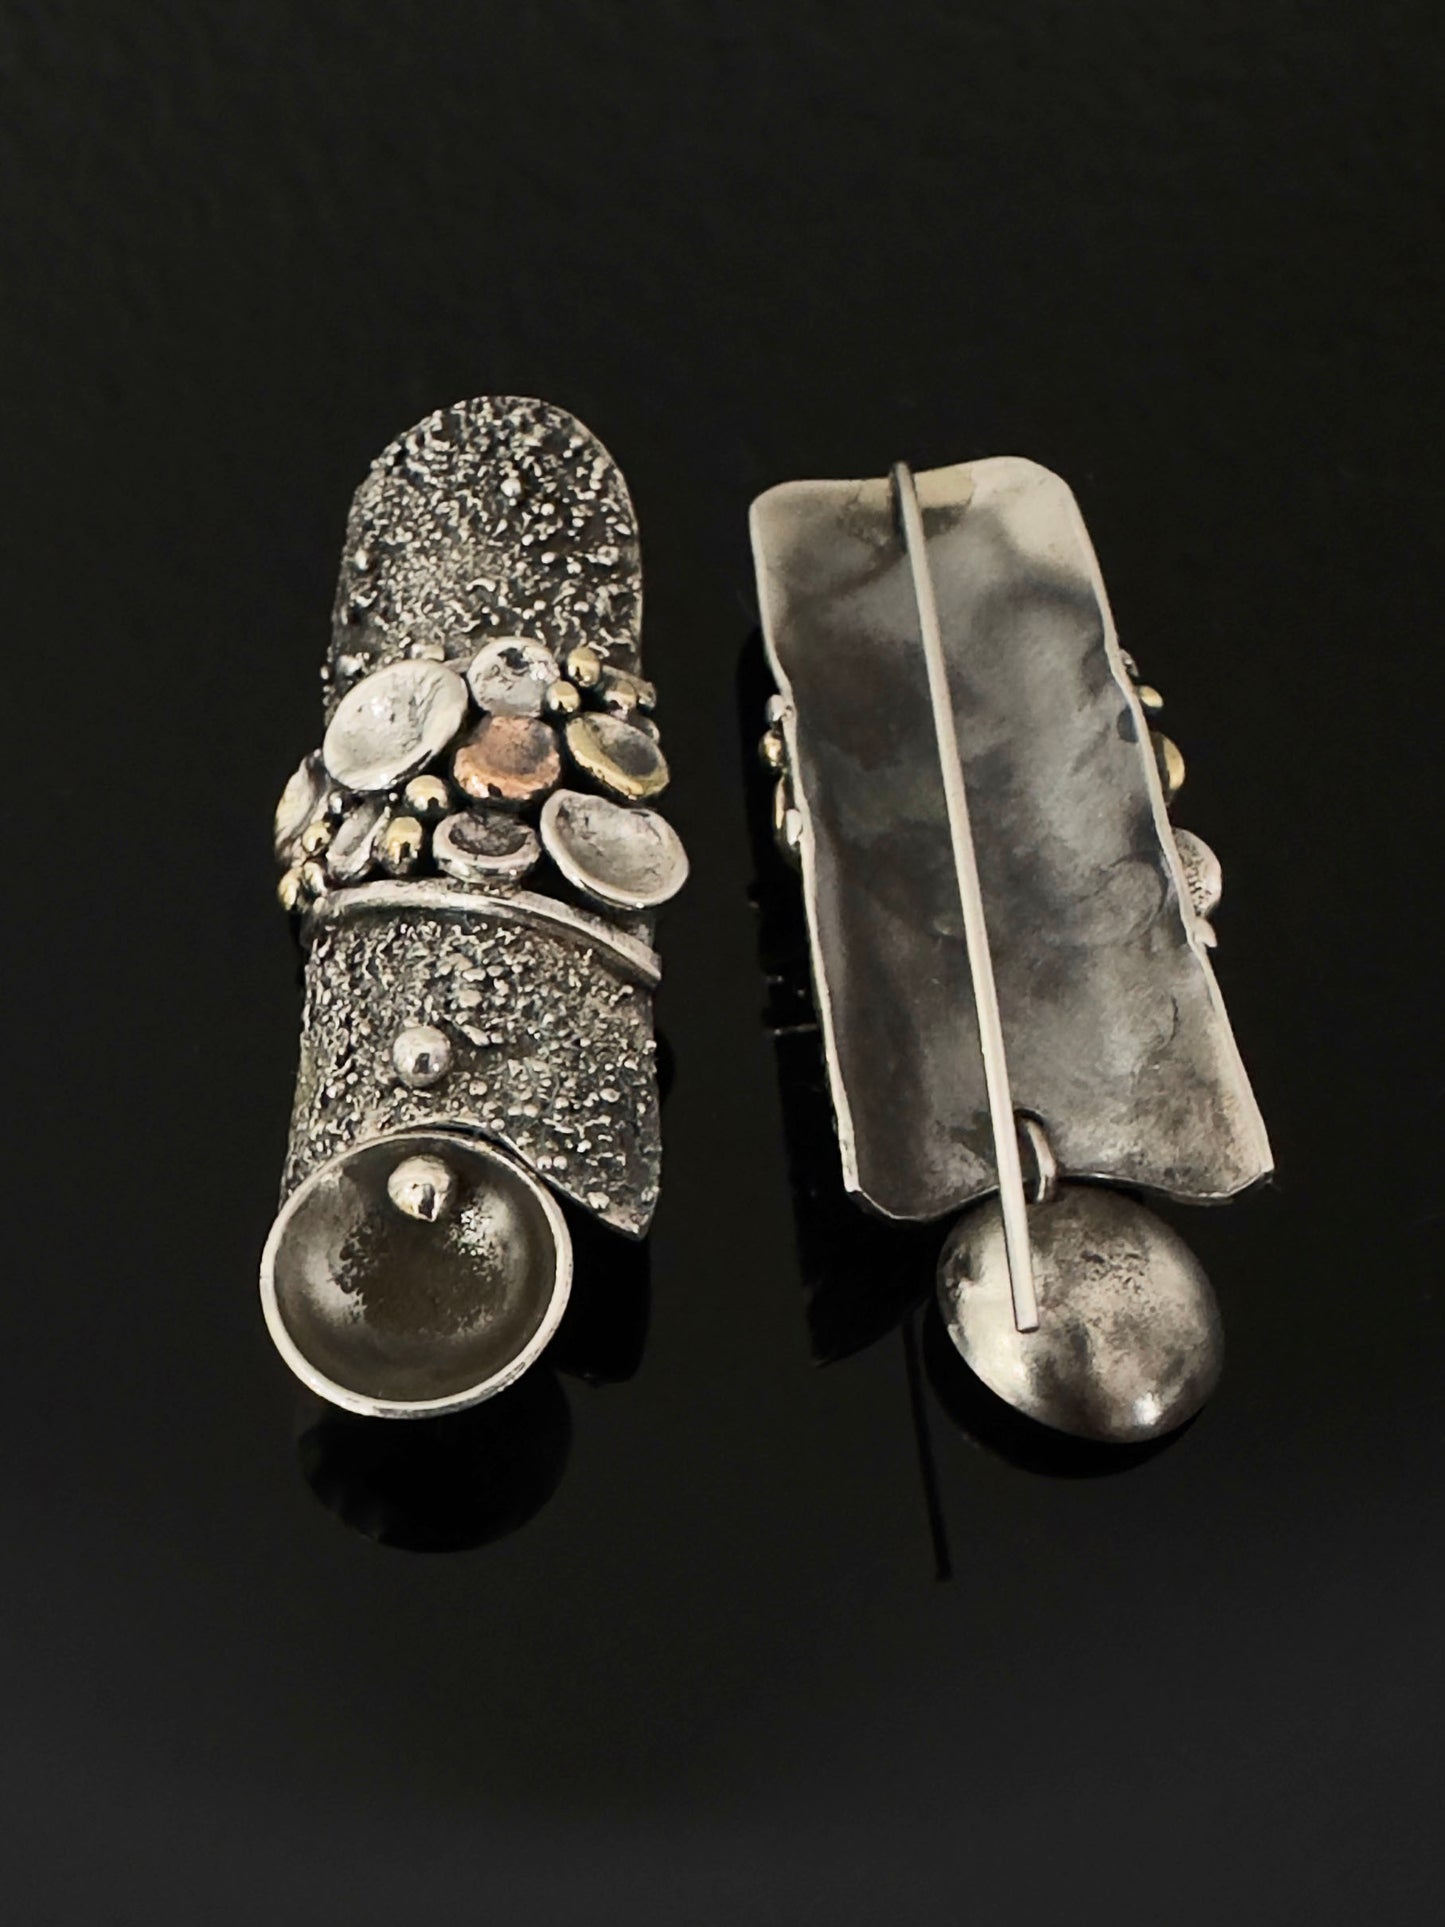 Tamara Kelly Designs - Pebbles on the beach earring